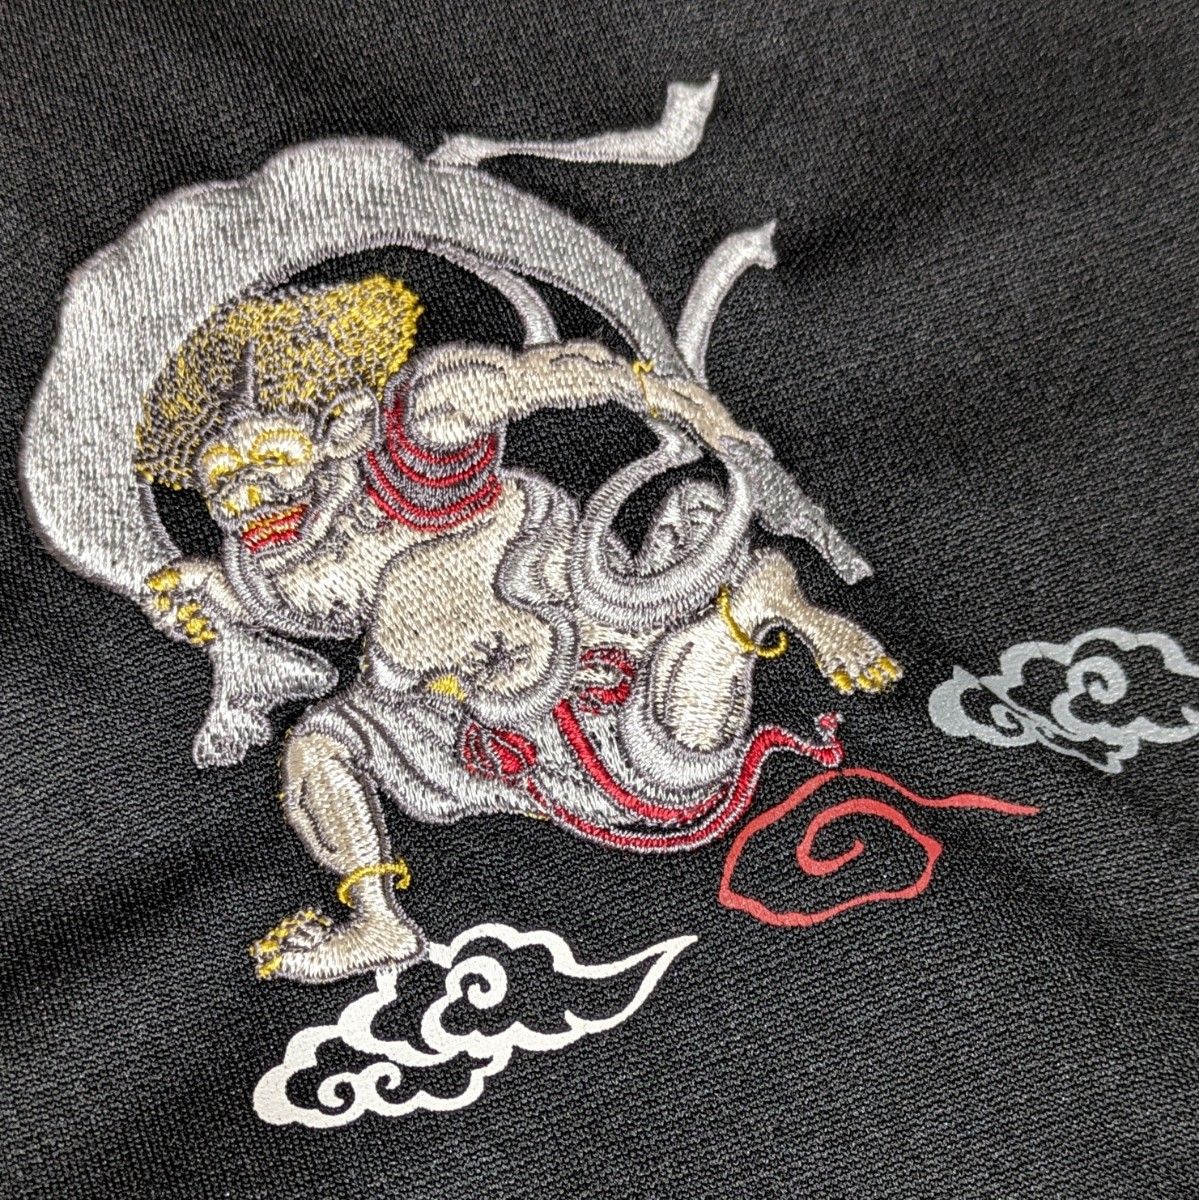  【SKKone】風神雷神 刺繍 スカジャン風 デザイン ジャージ スカジャージ トラックジャケット